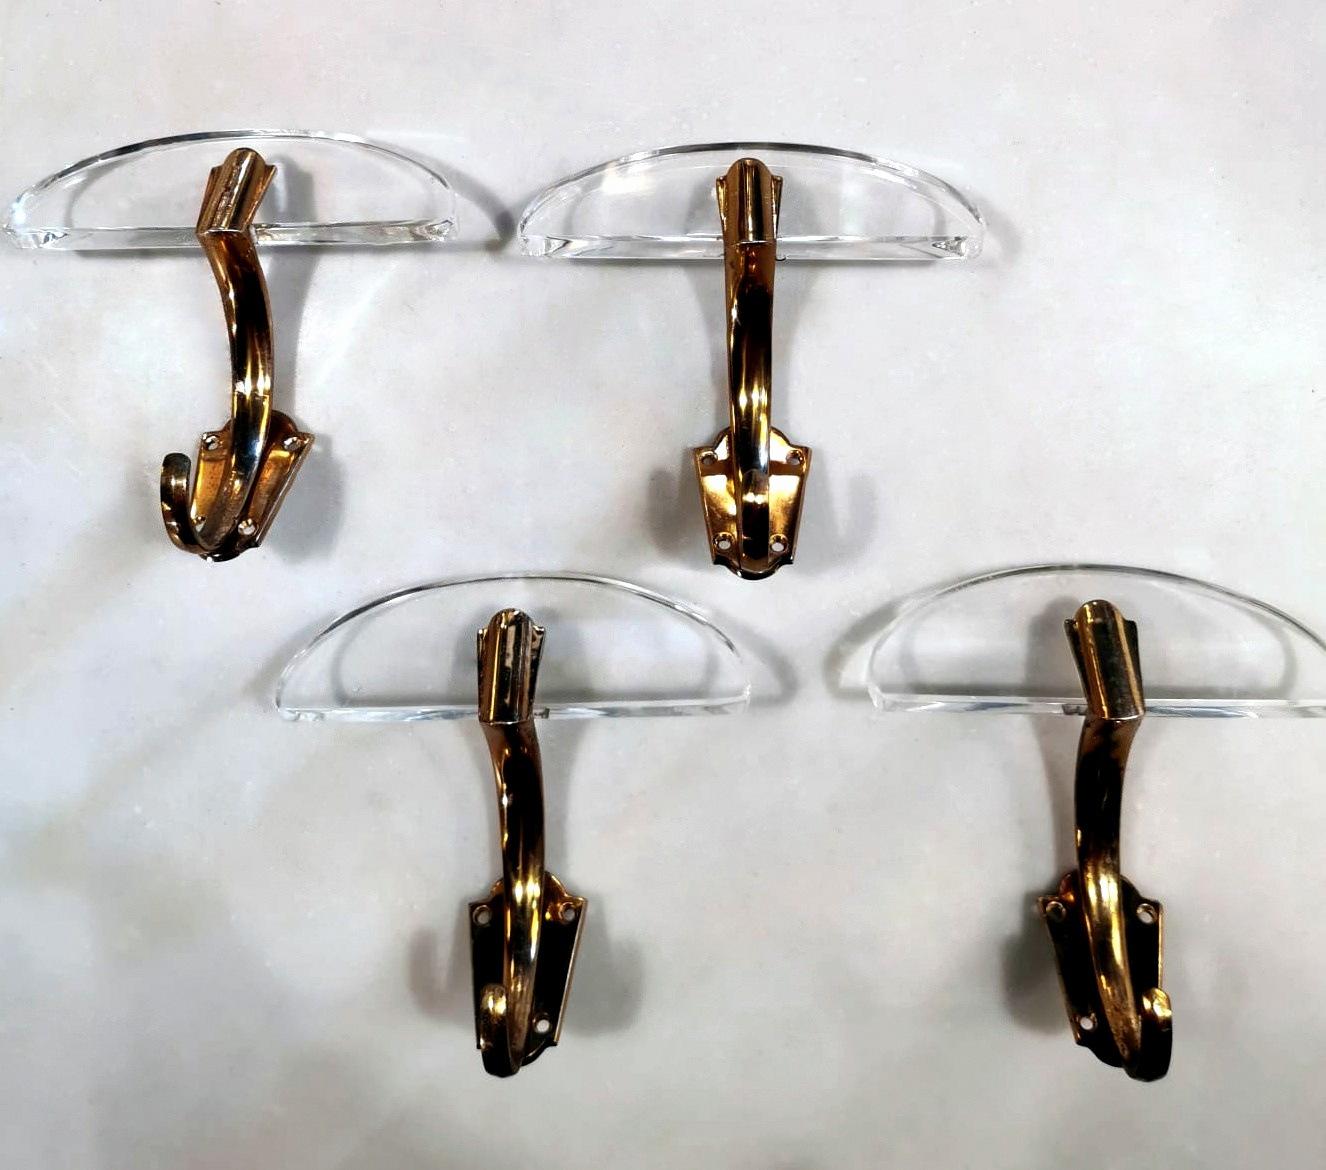 Polished Fontana Arte Style Set of 4 Italian Brass and Plexiglass Coat-Hangers